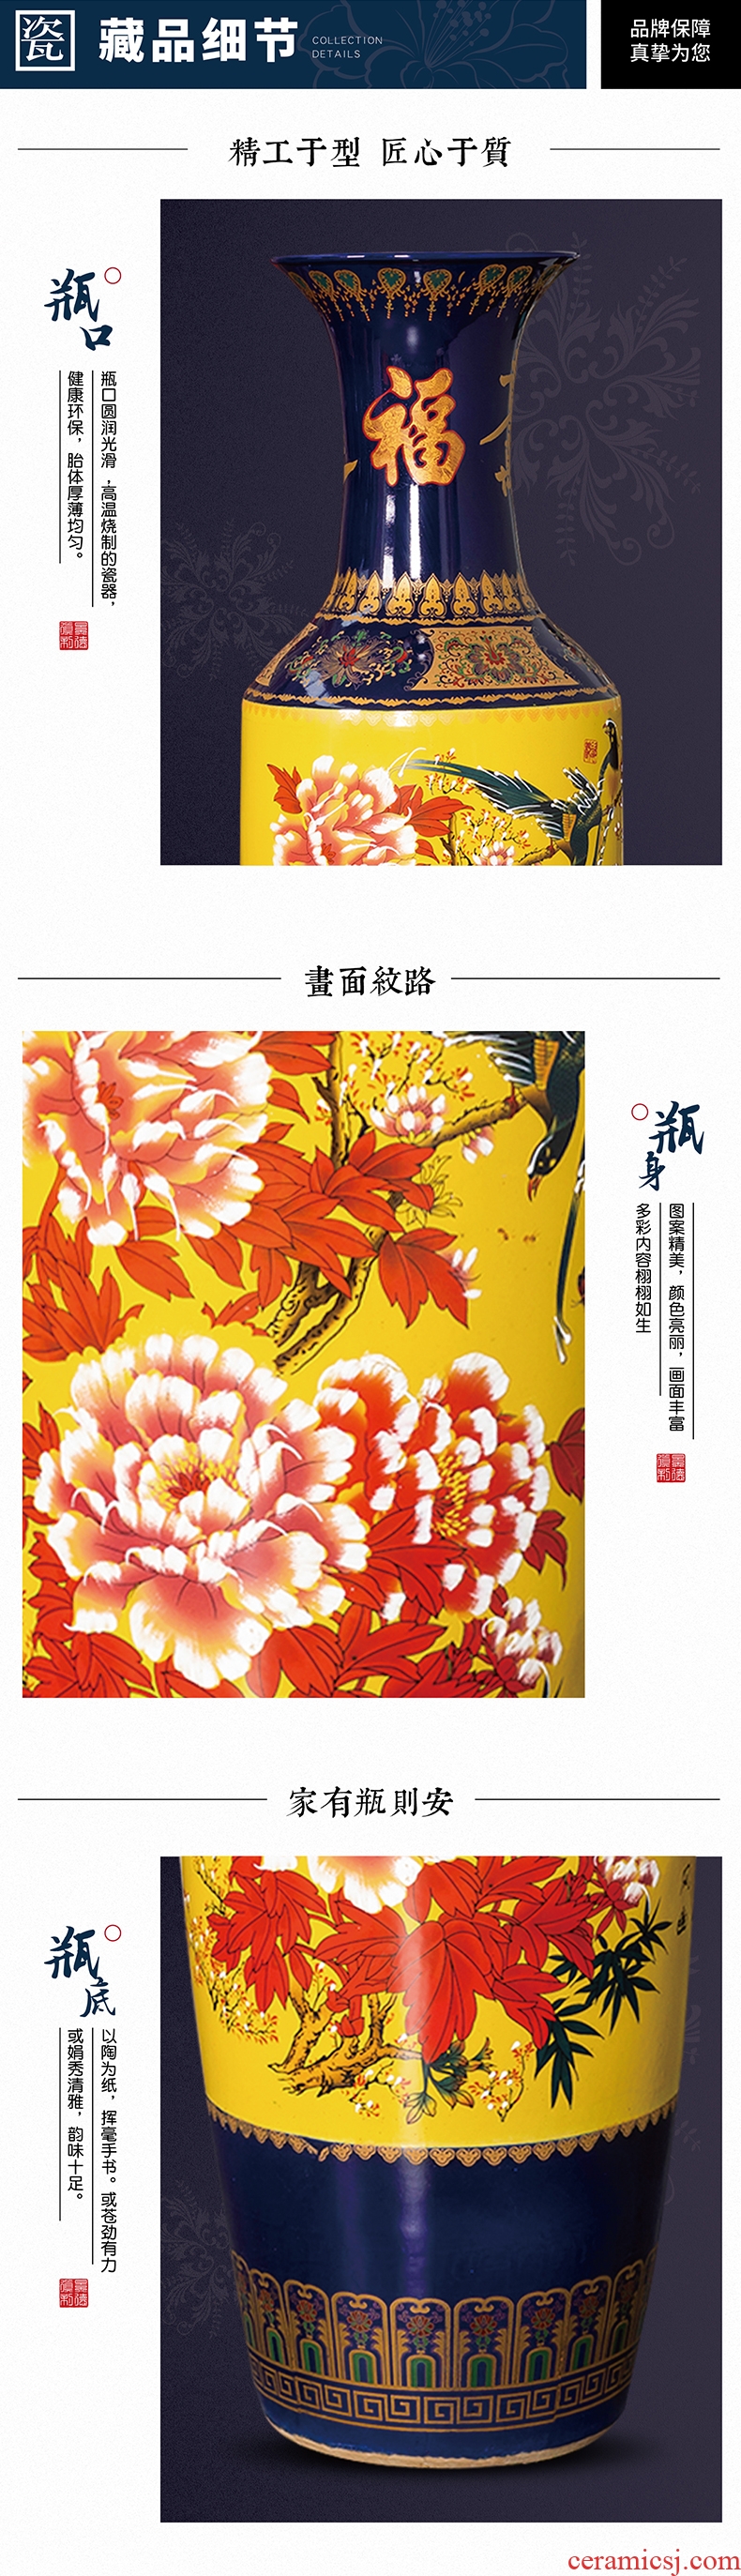 Jingdezhen ceramics of large vase large new Chinese style household flower arrangement sitting room adornment TV ark, furnishing articles - 602548386888